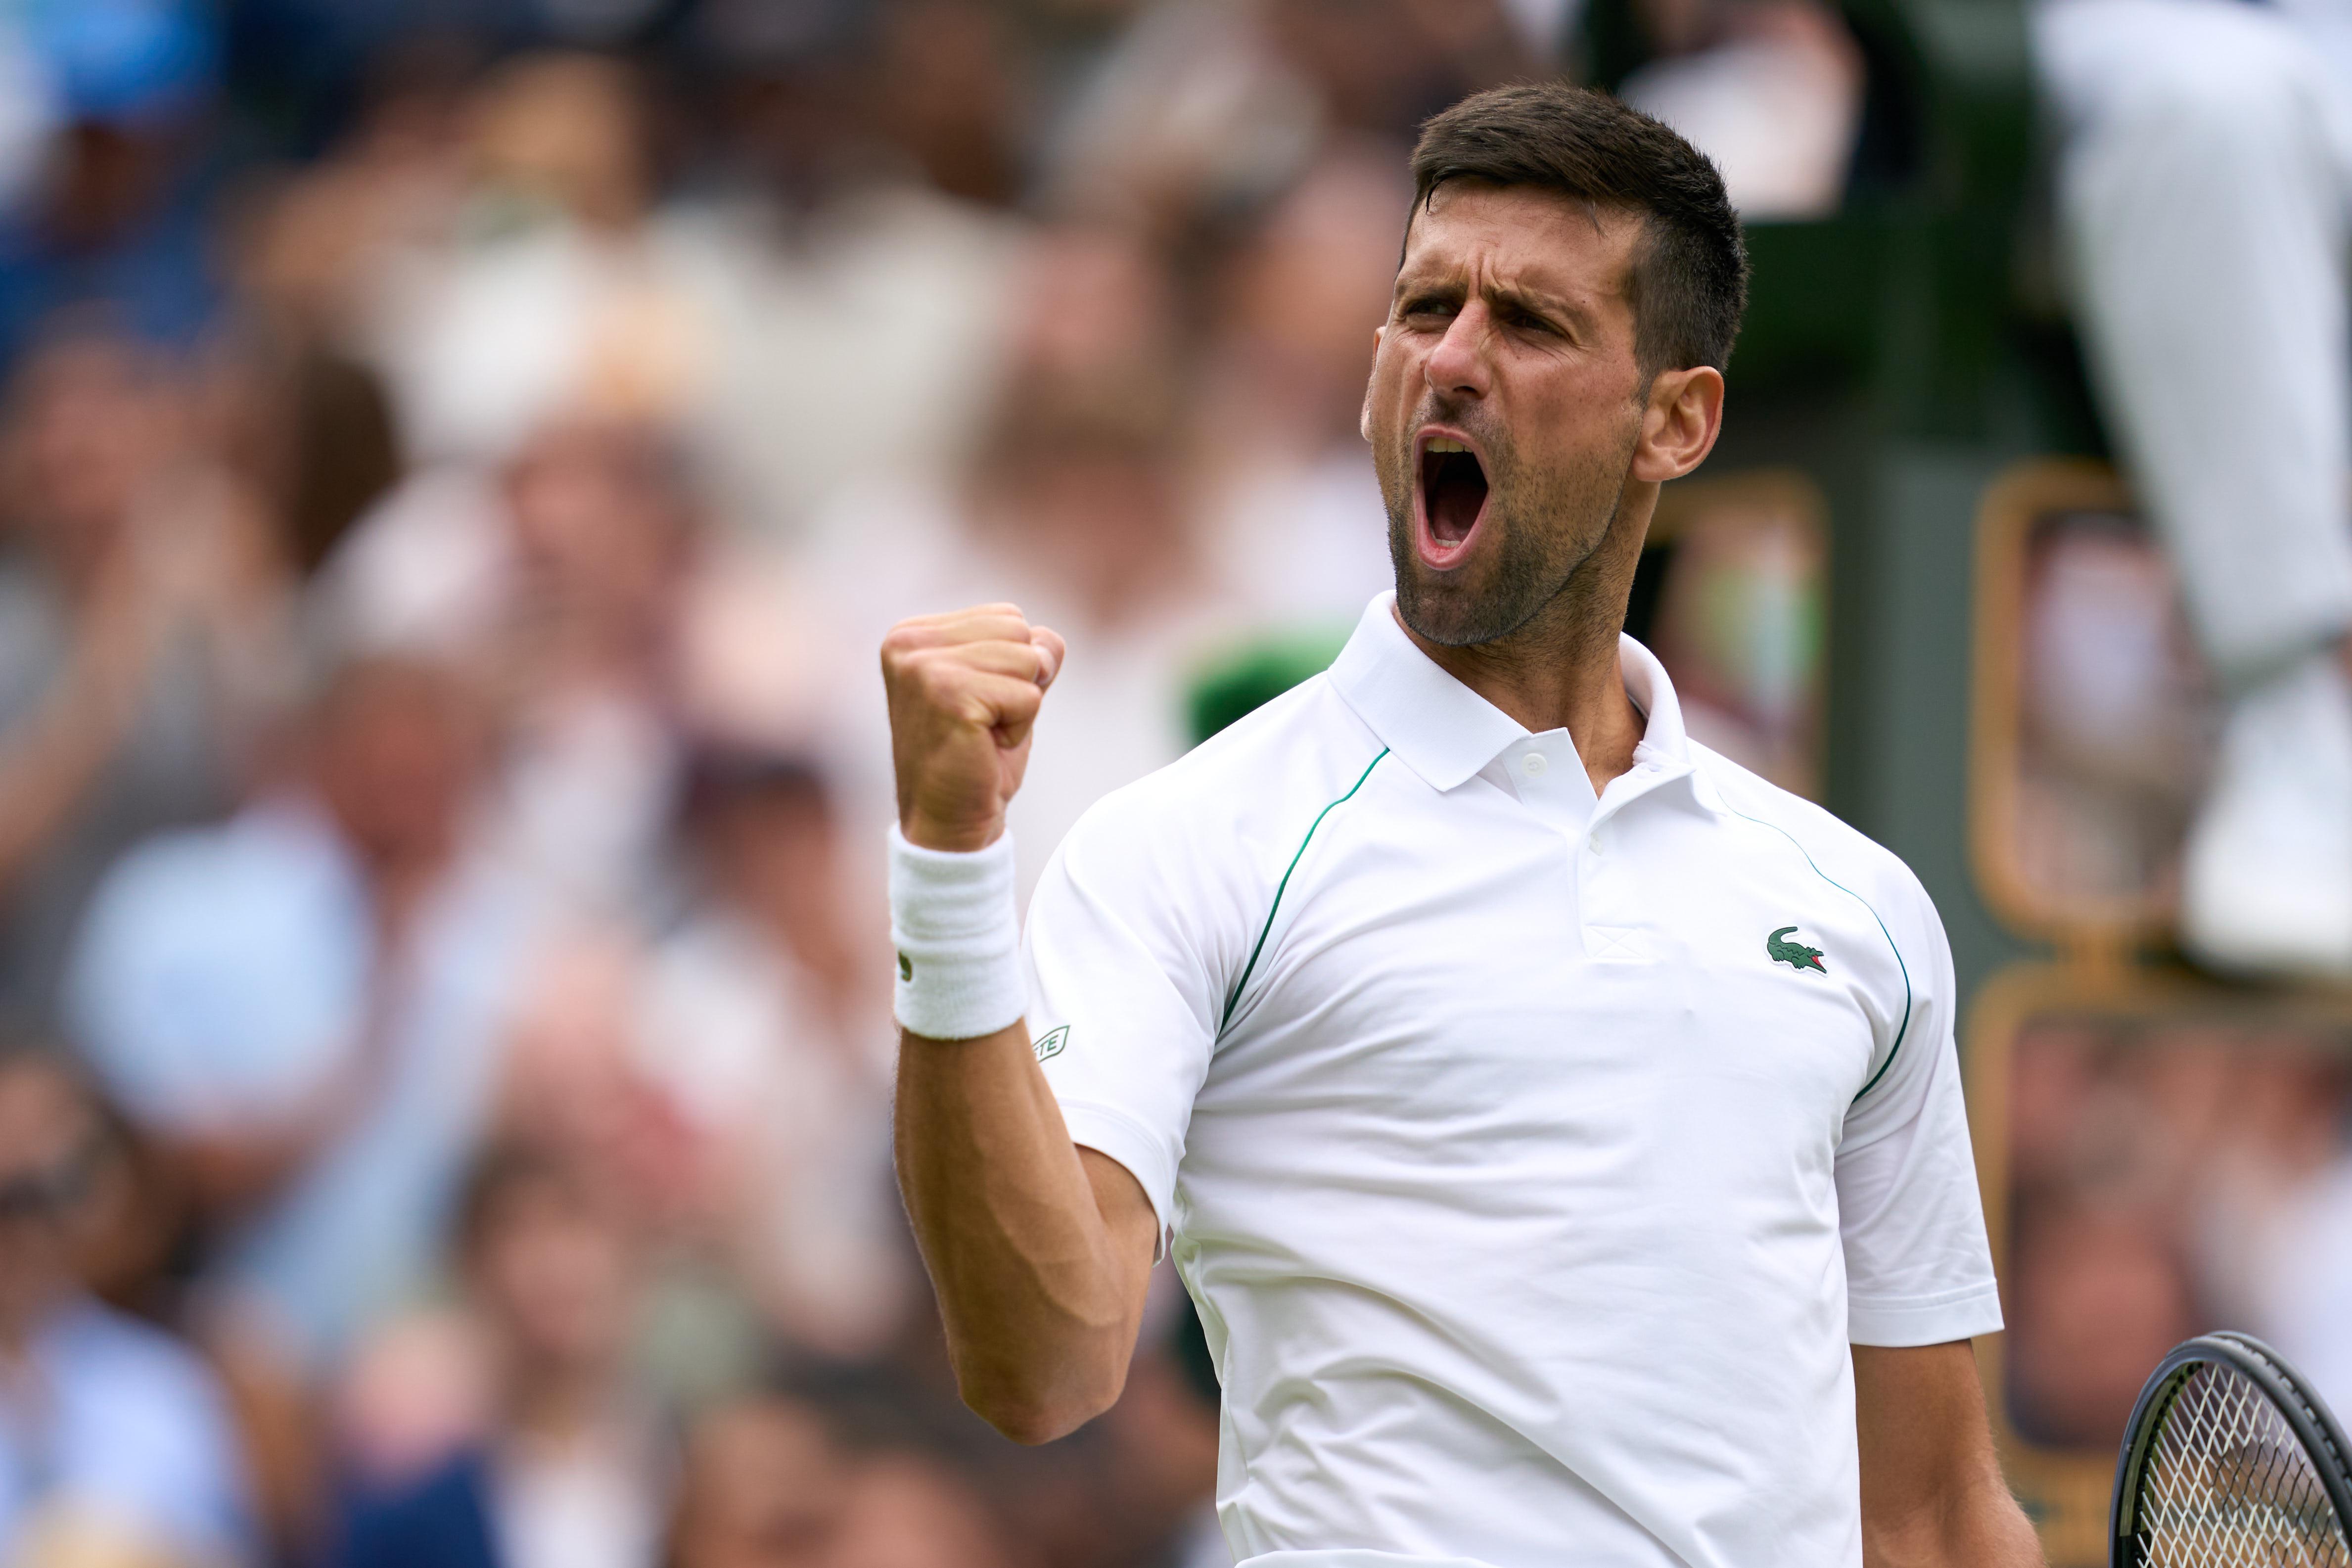 Novak Djokovic vs Cameron Norrie Odds, Prediction and Betting Trends for 2022 Wimbledon Men's Semifinal